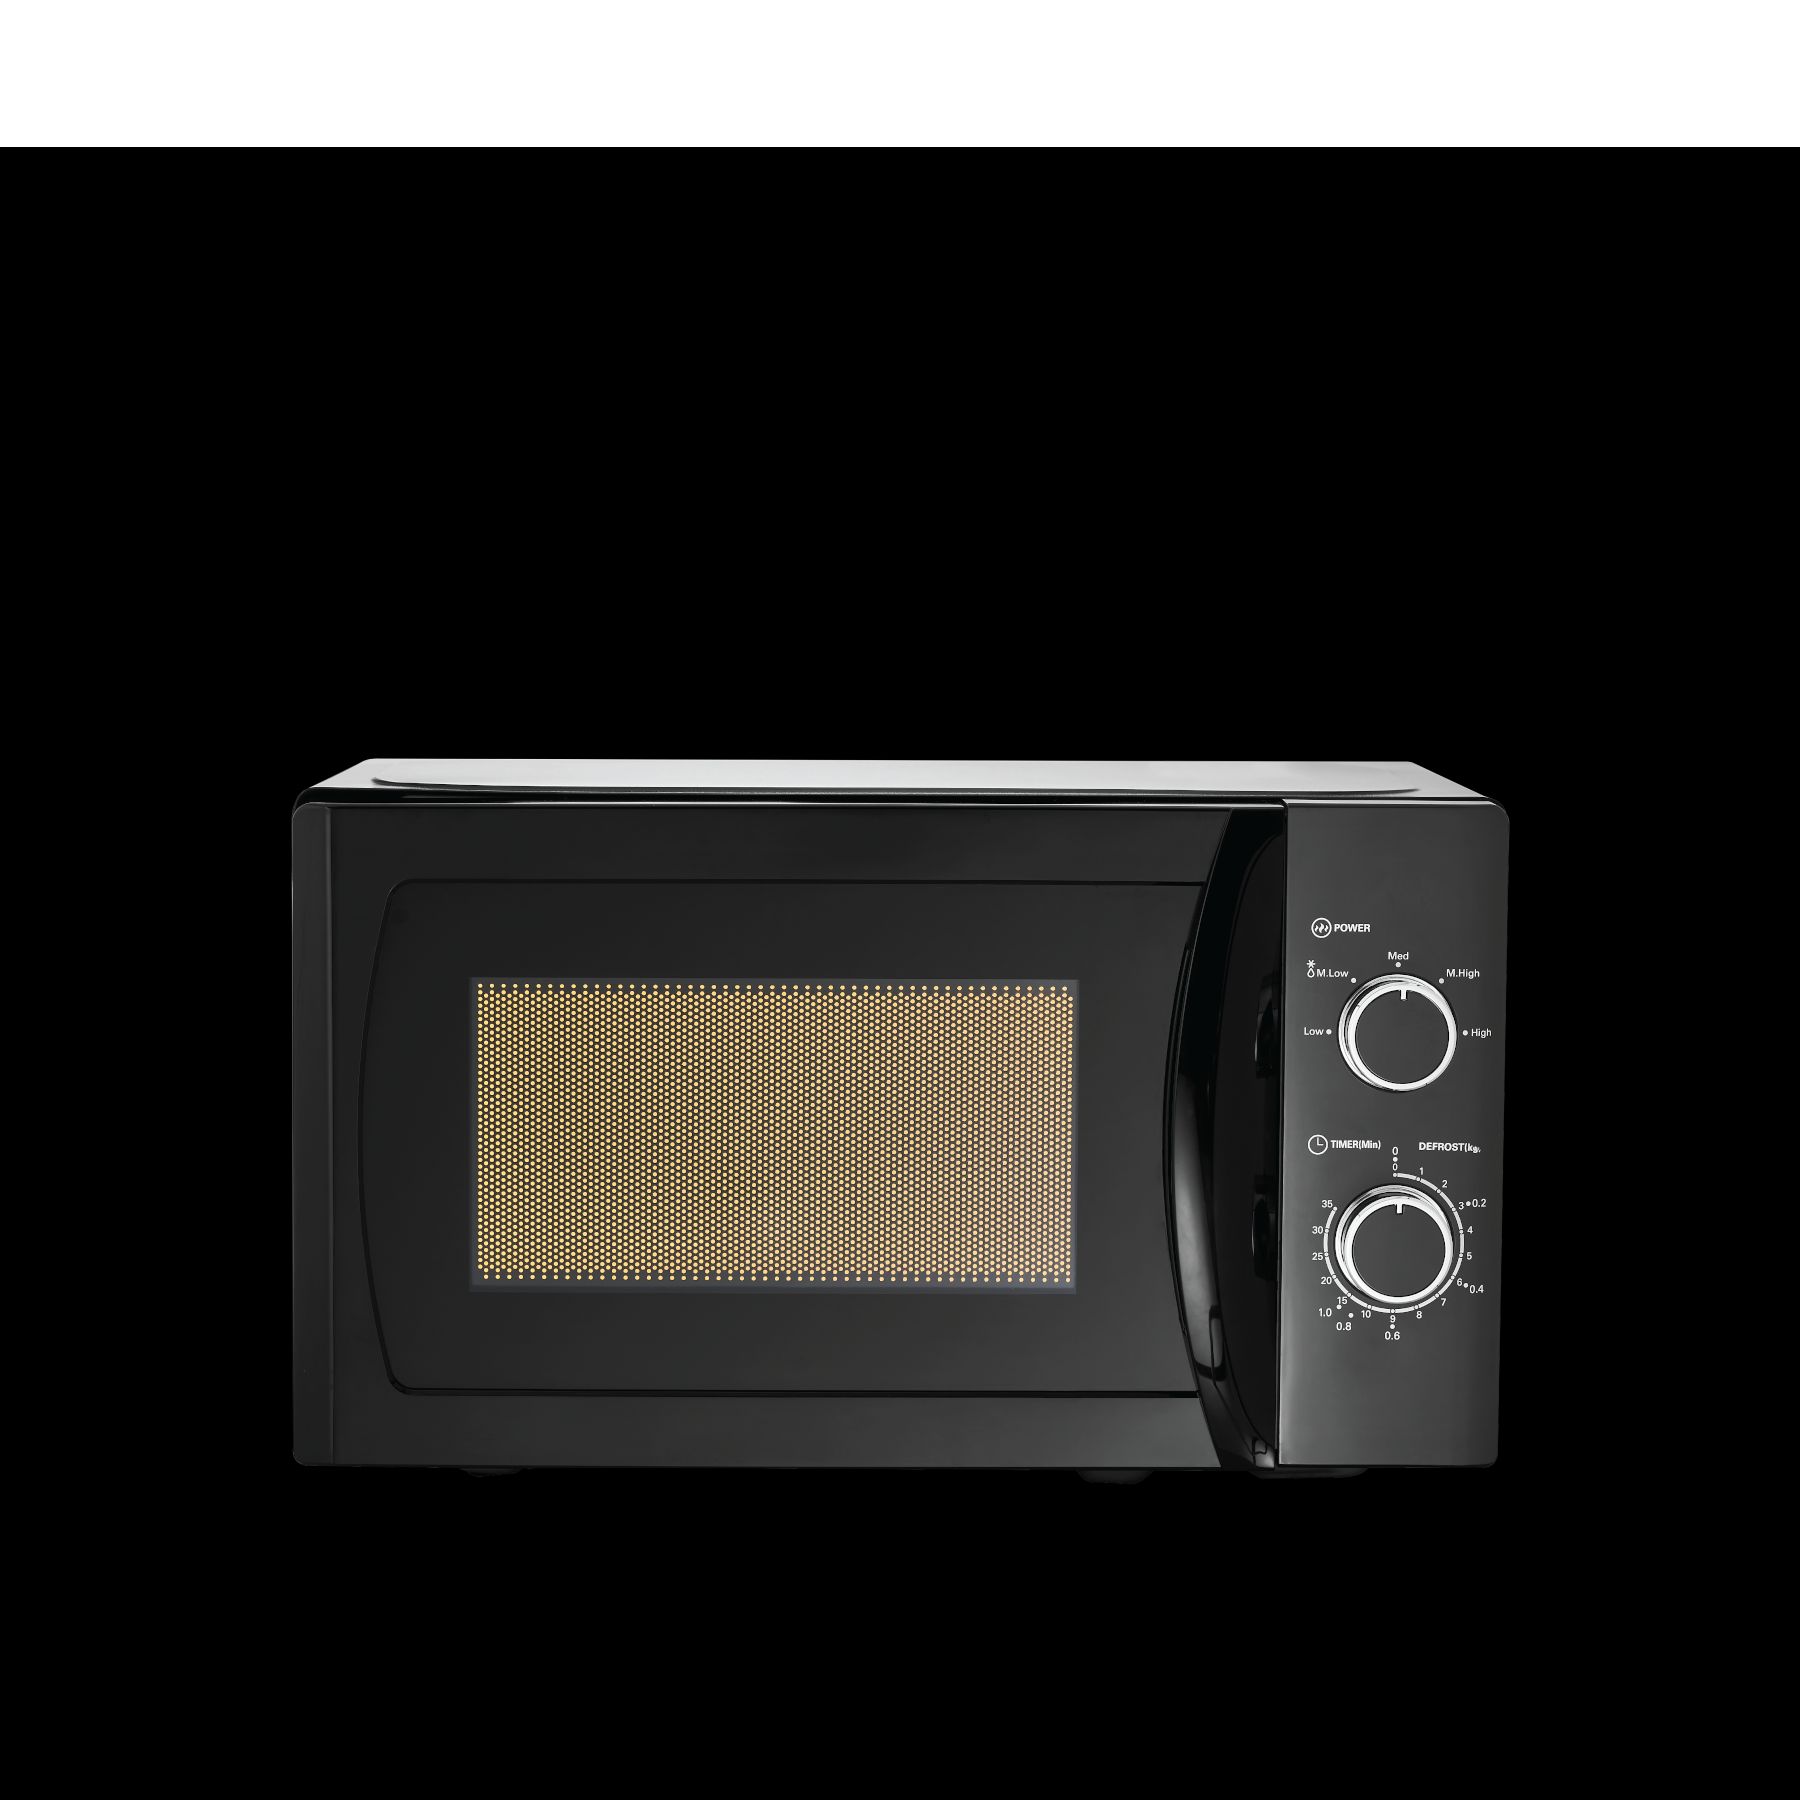 IFB 20Litre Solo Microwave Oven 20PM-MEC2B Black - Mahajan Electronics Online